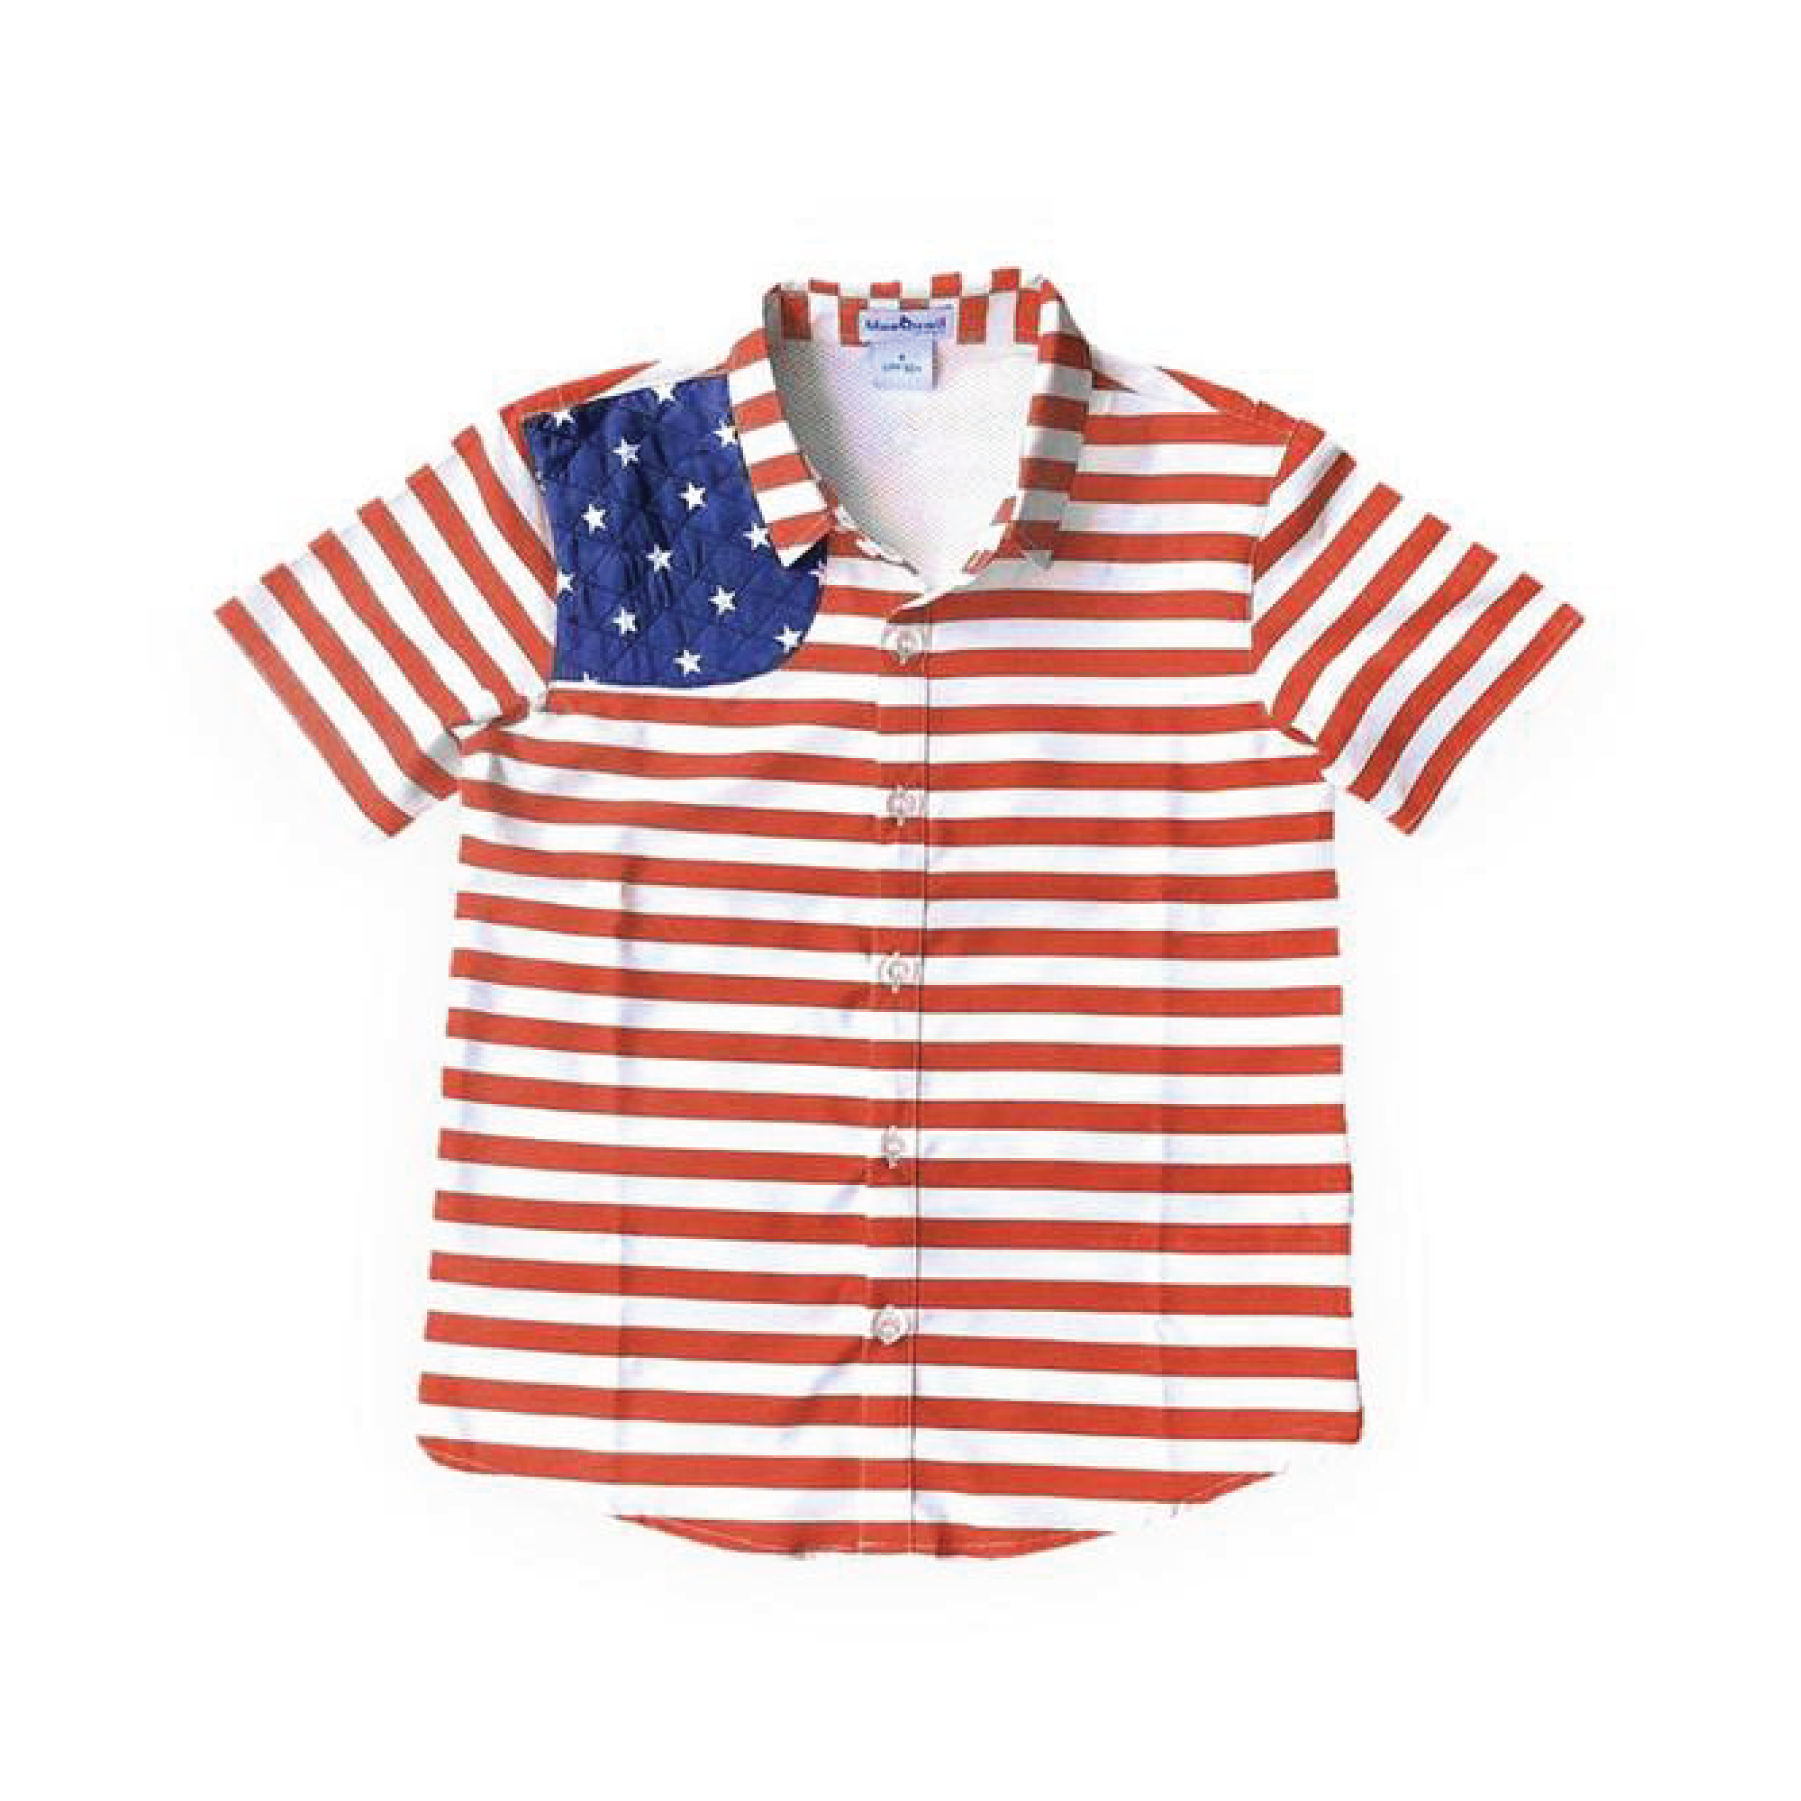 USA Short Sleeve Shirt